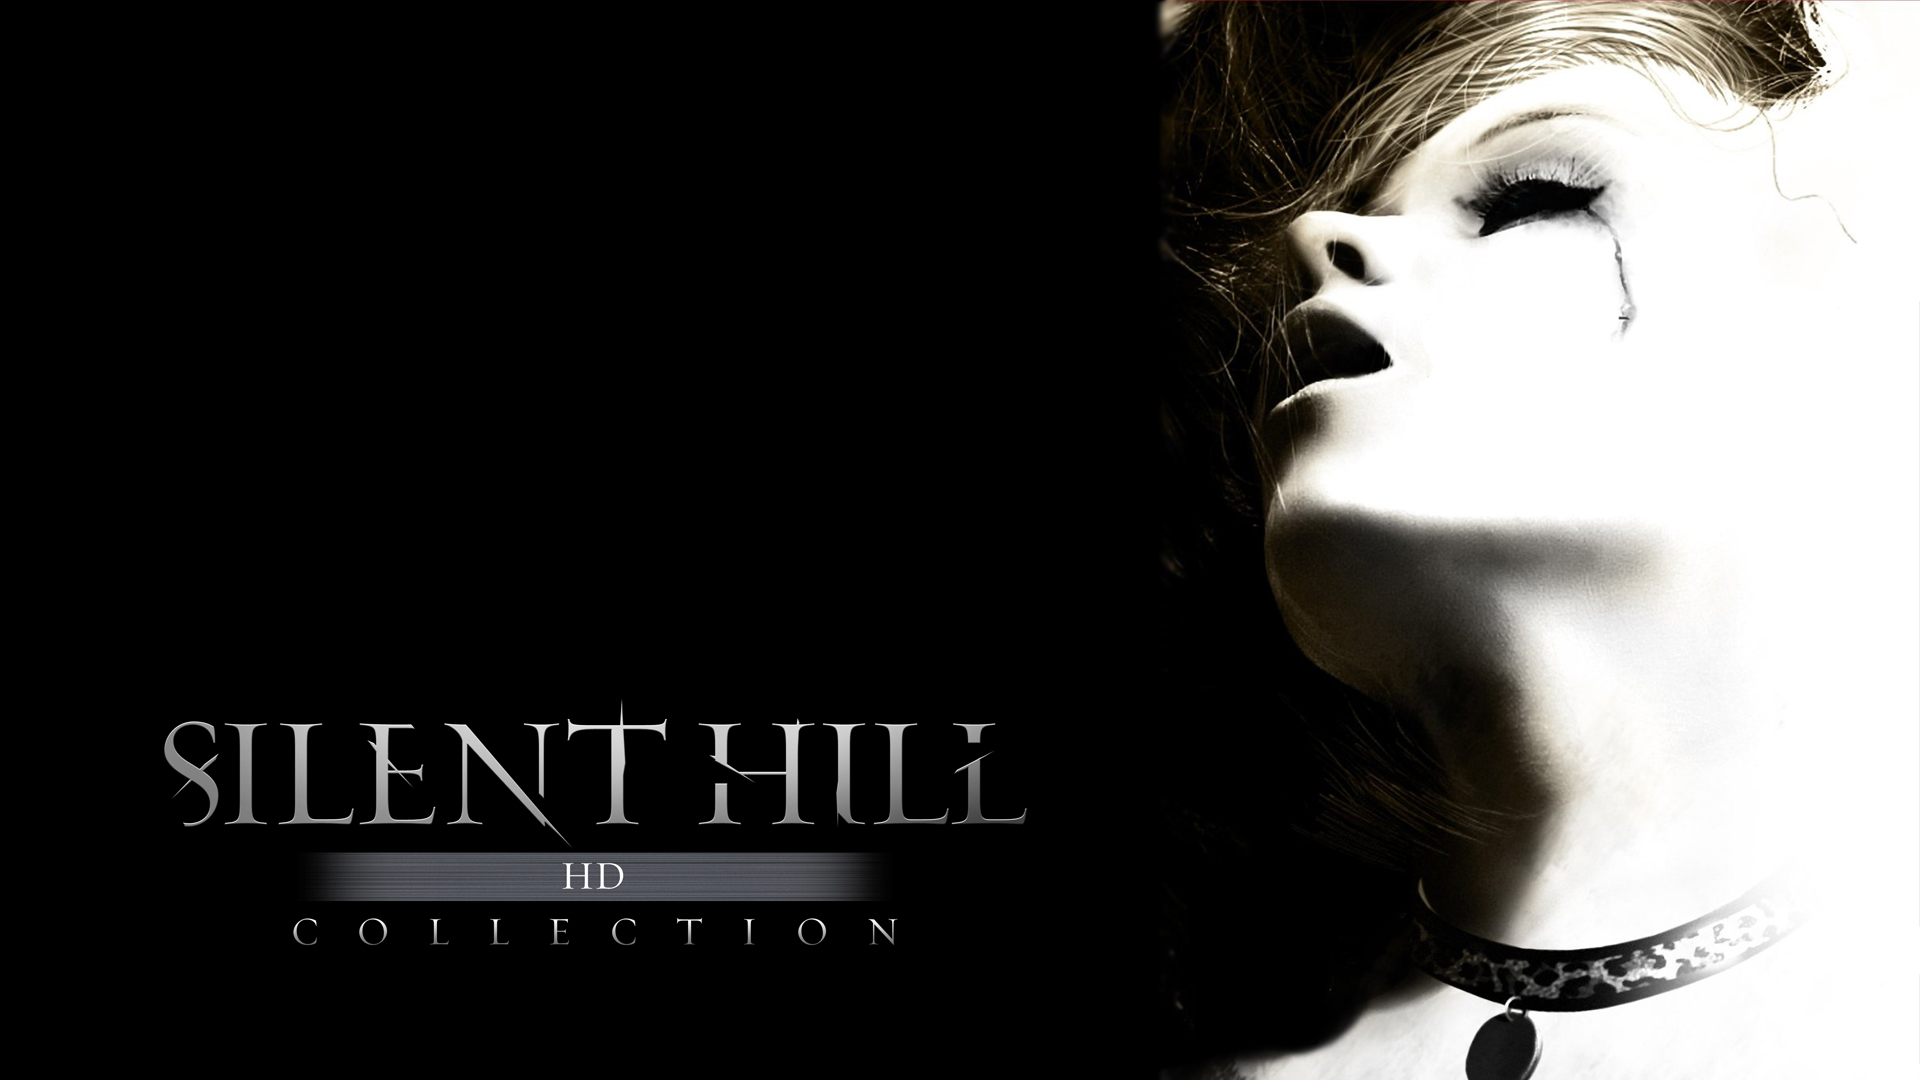 Silent Hill HD Wallpaper By Yurtik